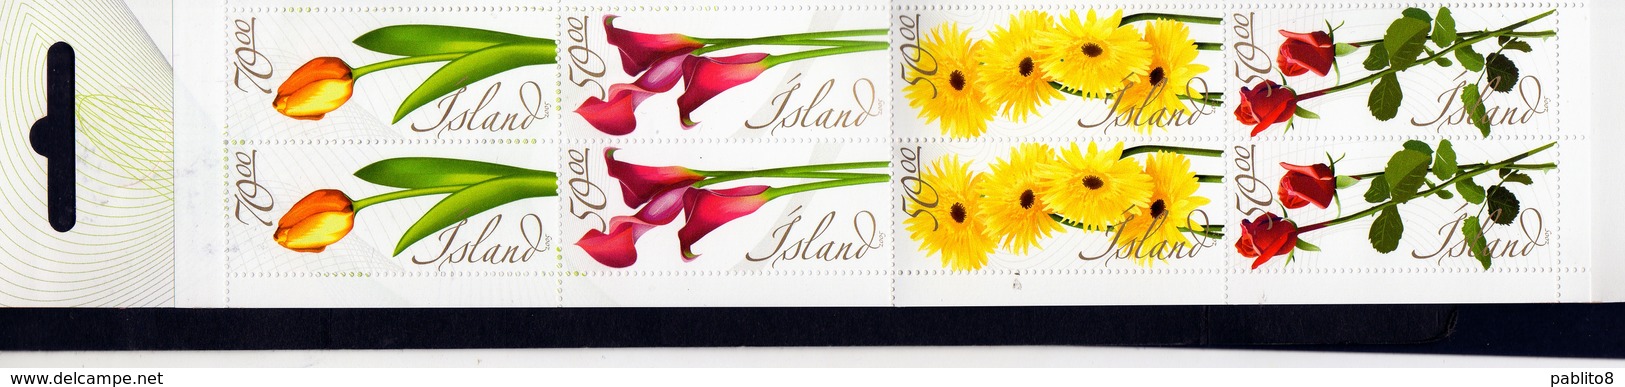 ISLANDA ICELAND ISLANDE ISLAND 2005 FLORA FLOWERS FIOR FELURS BOOKLET LIBRETTO CARNET UNUSED NUOVO MNH - Libretti